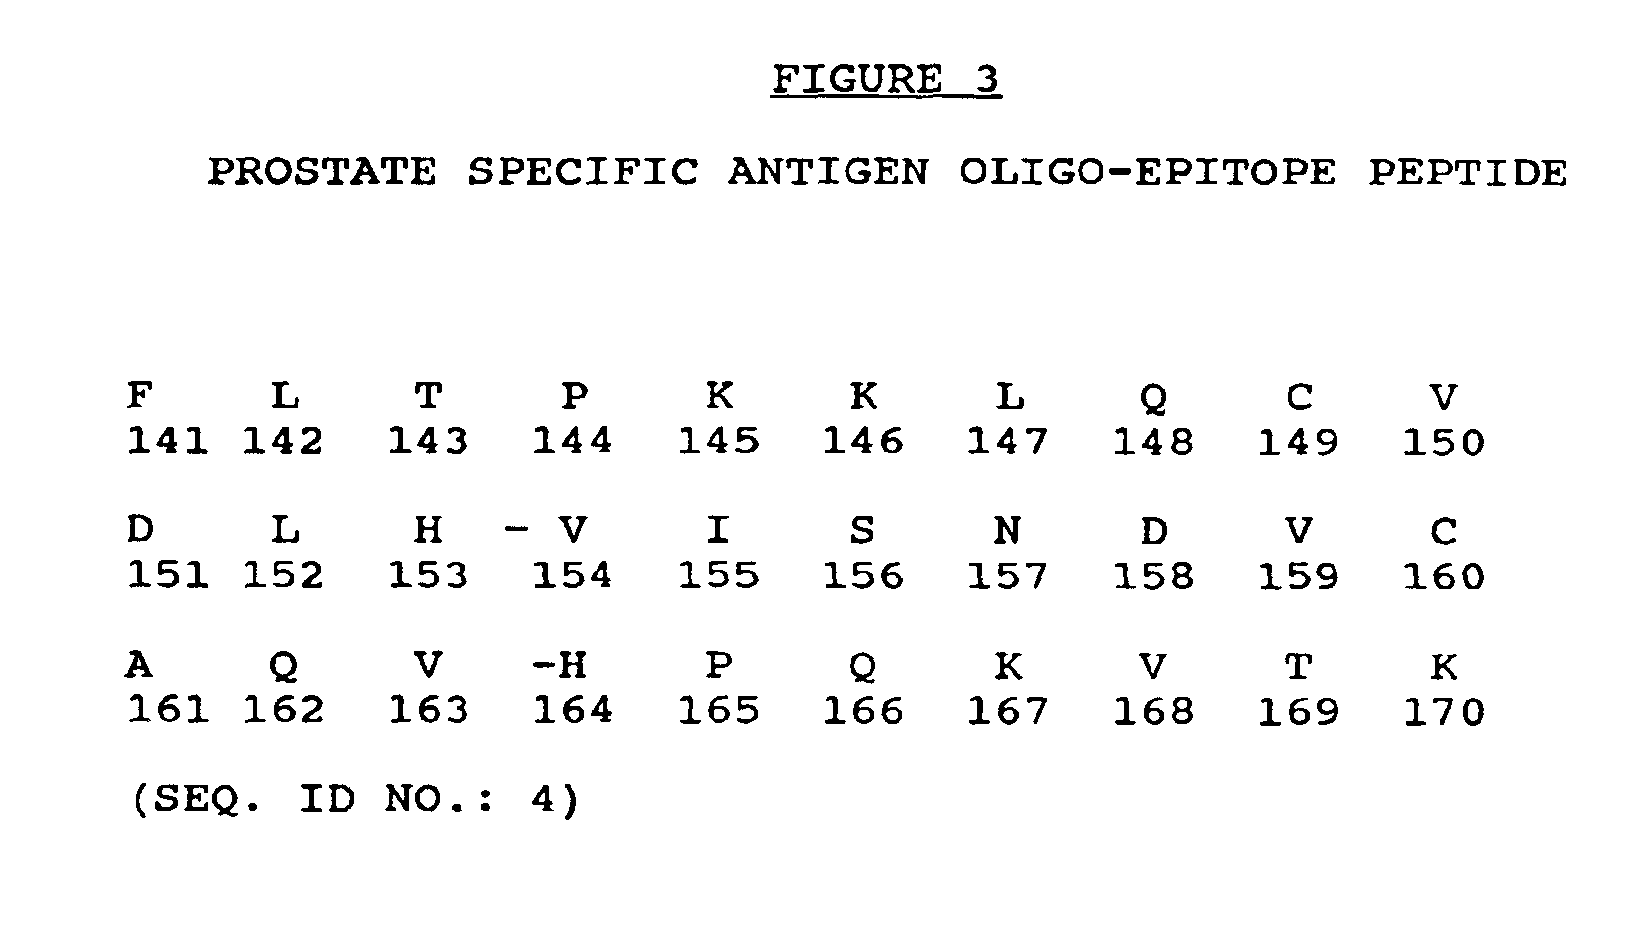 Prostate specific antigen oligo-epitope peptide